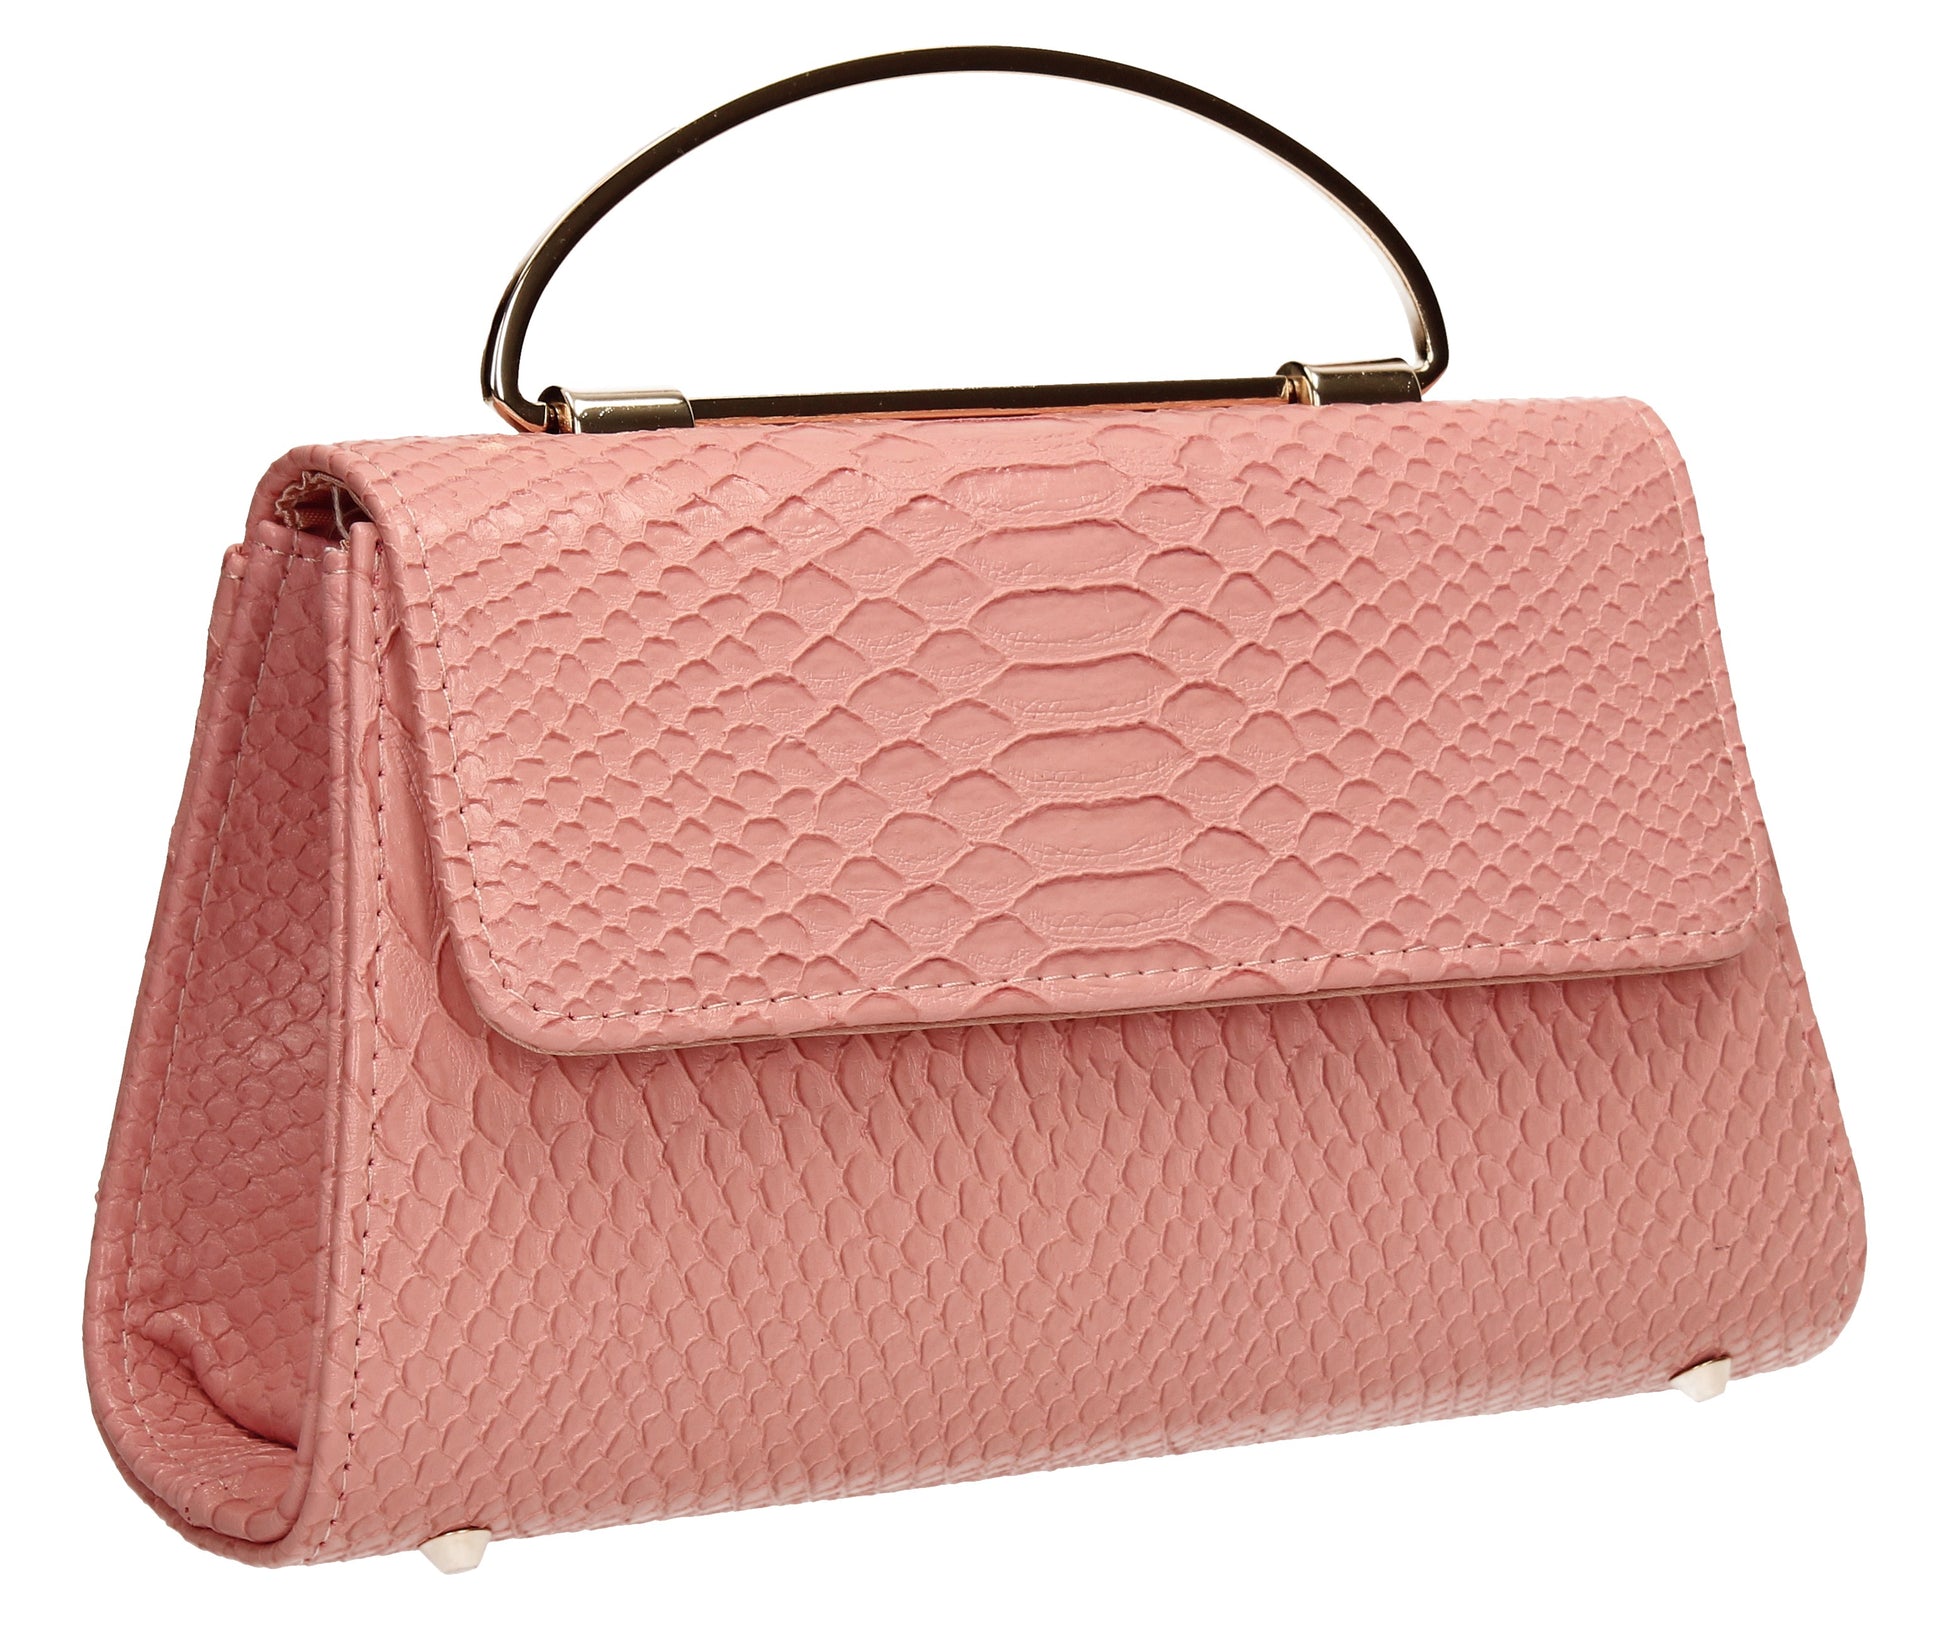 SWANKYSWANS Laura Clutch Bag Pink Cute Cheap Clutch Bag For Weddings School and Work